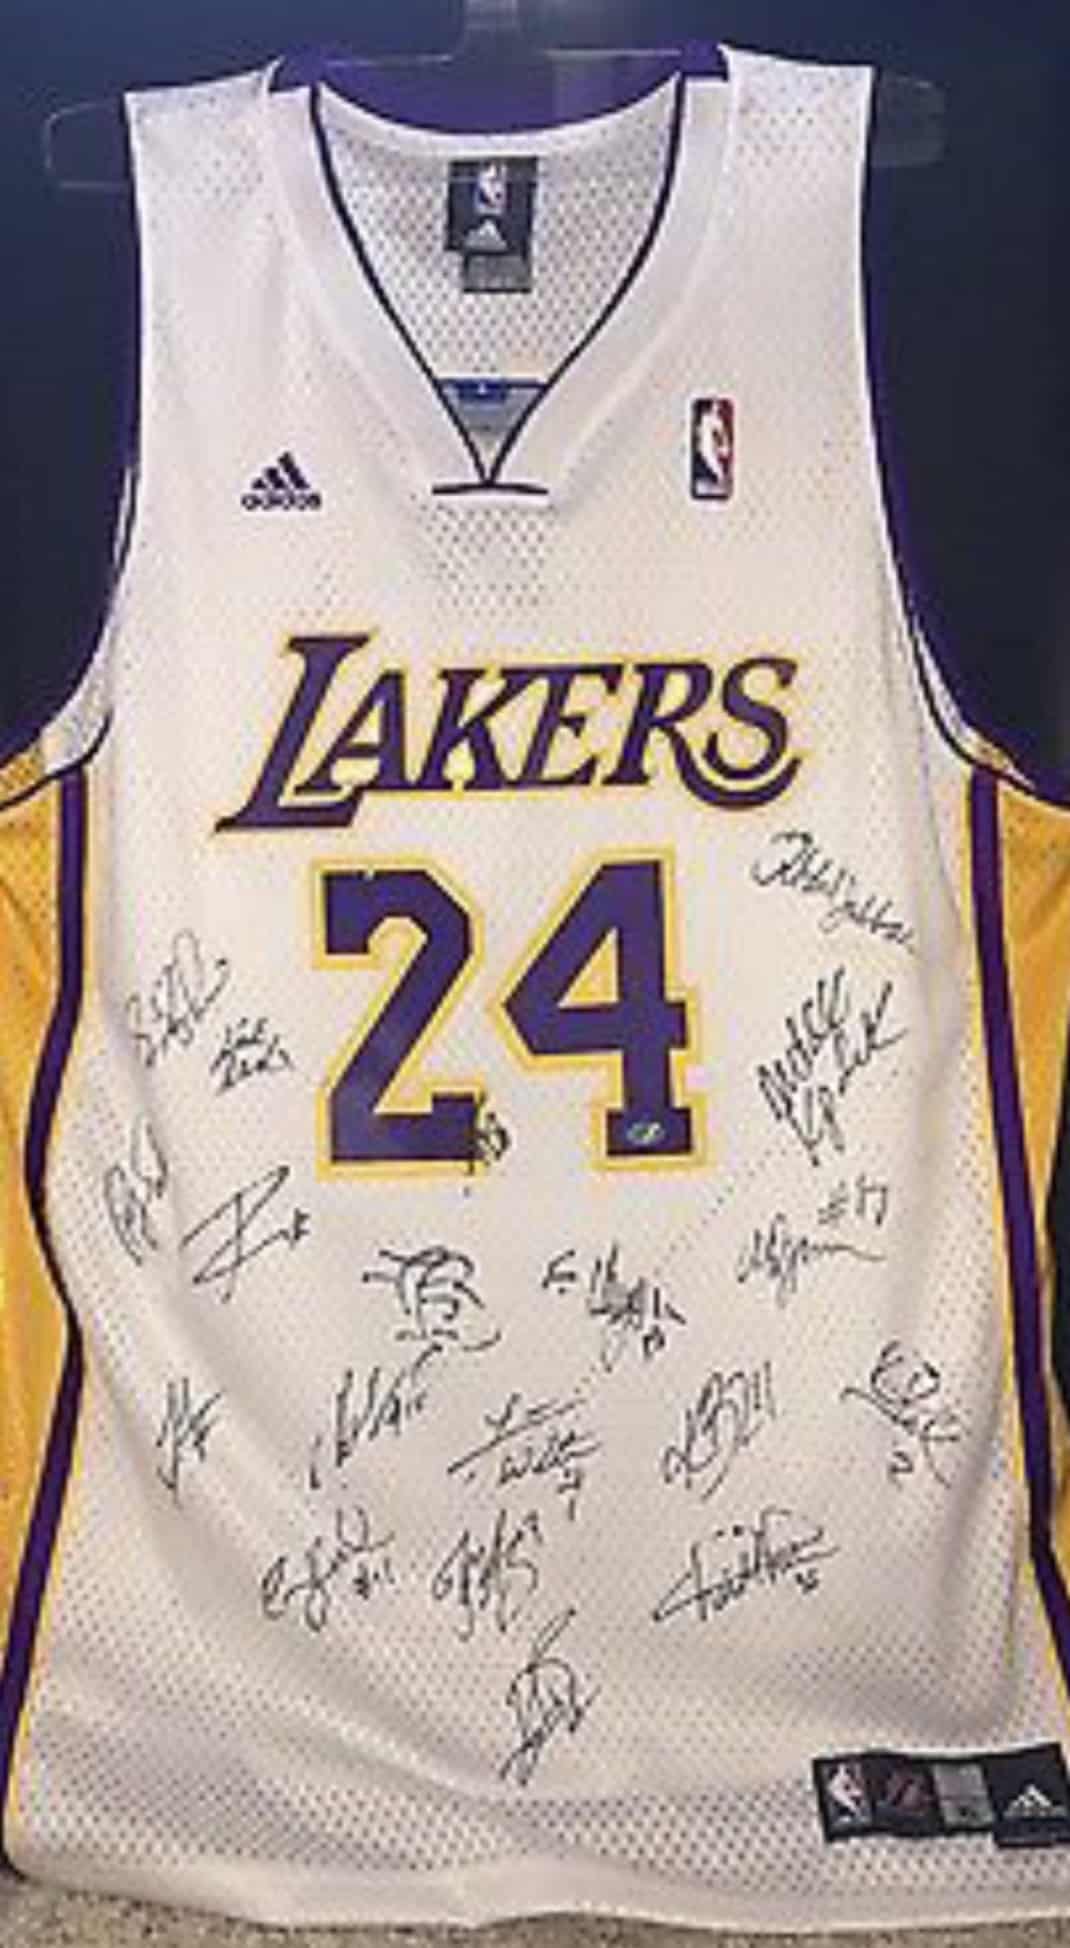 La Lakers Kobe Bryant Team championship jersey